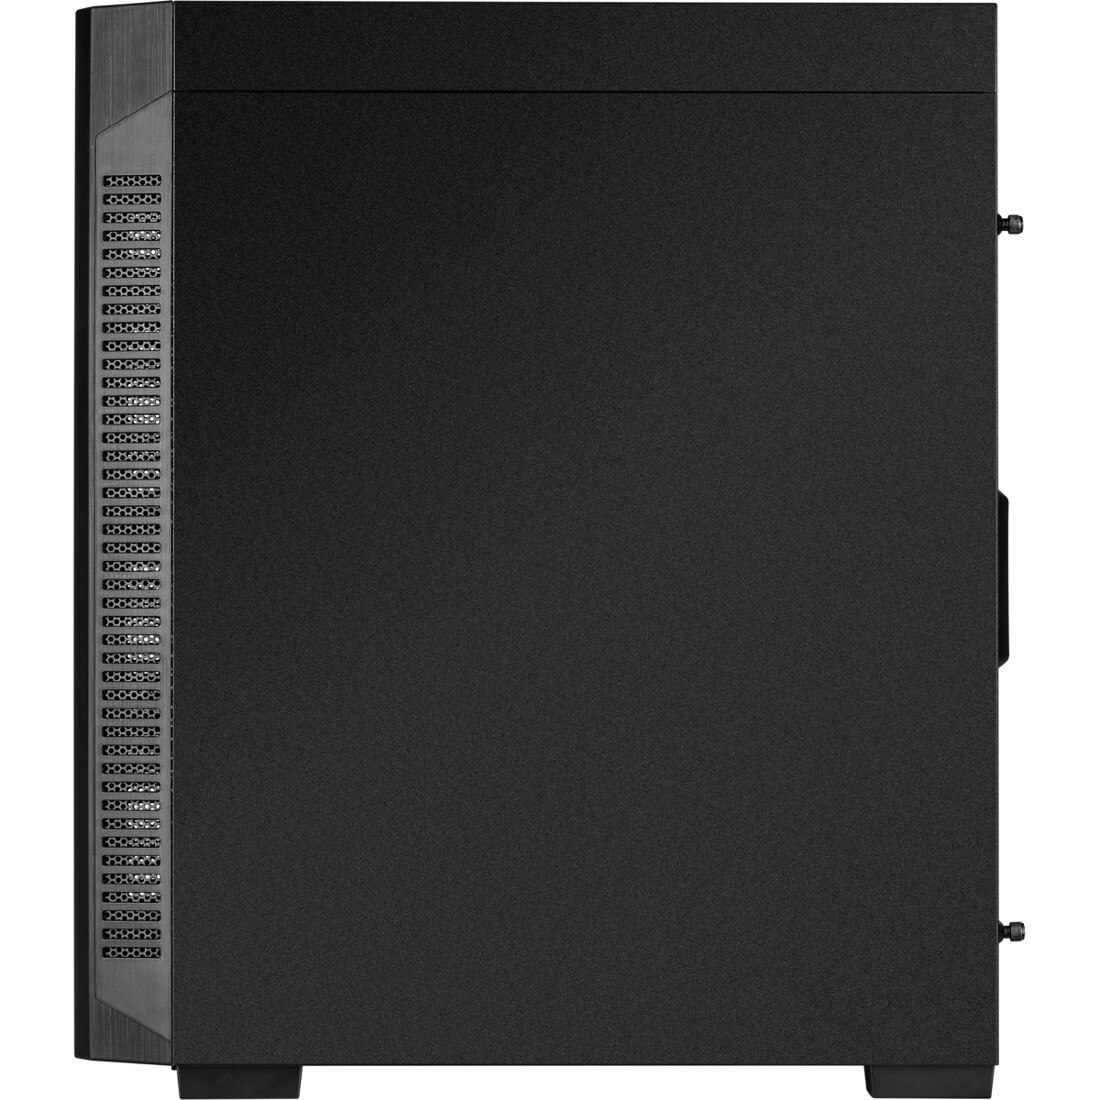 Corsair 110Q Computer Case - Mini ITX, Micro ATX, ATX Motherboard Supported - Mid-tower - Steel, Plastic - Black